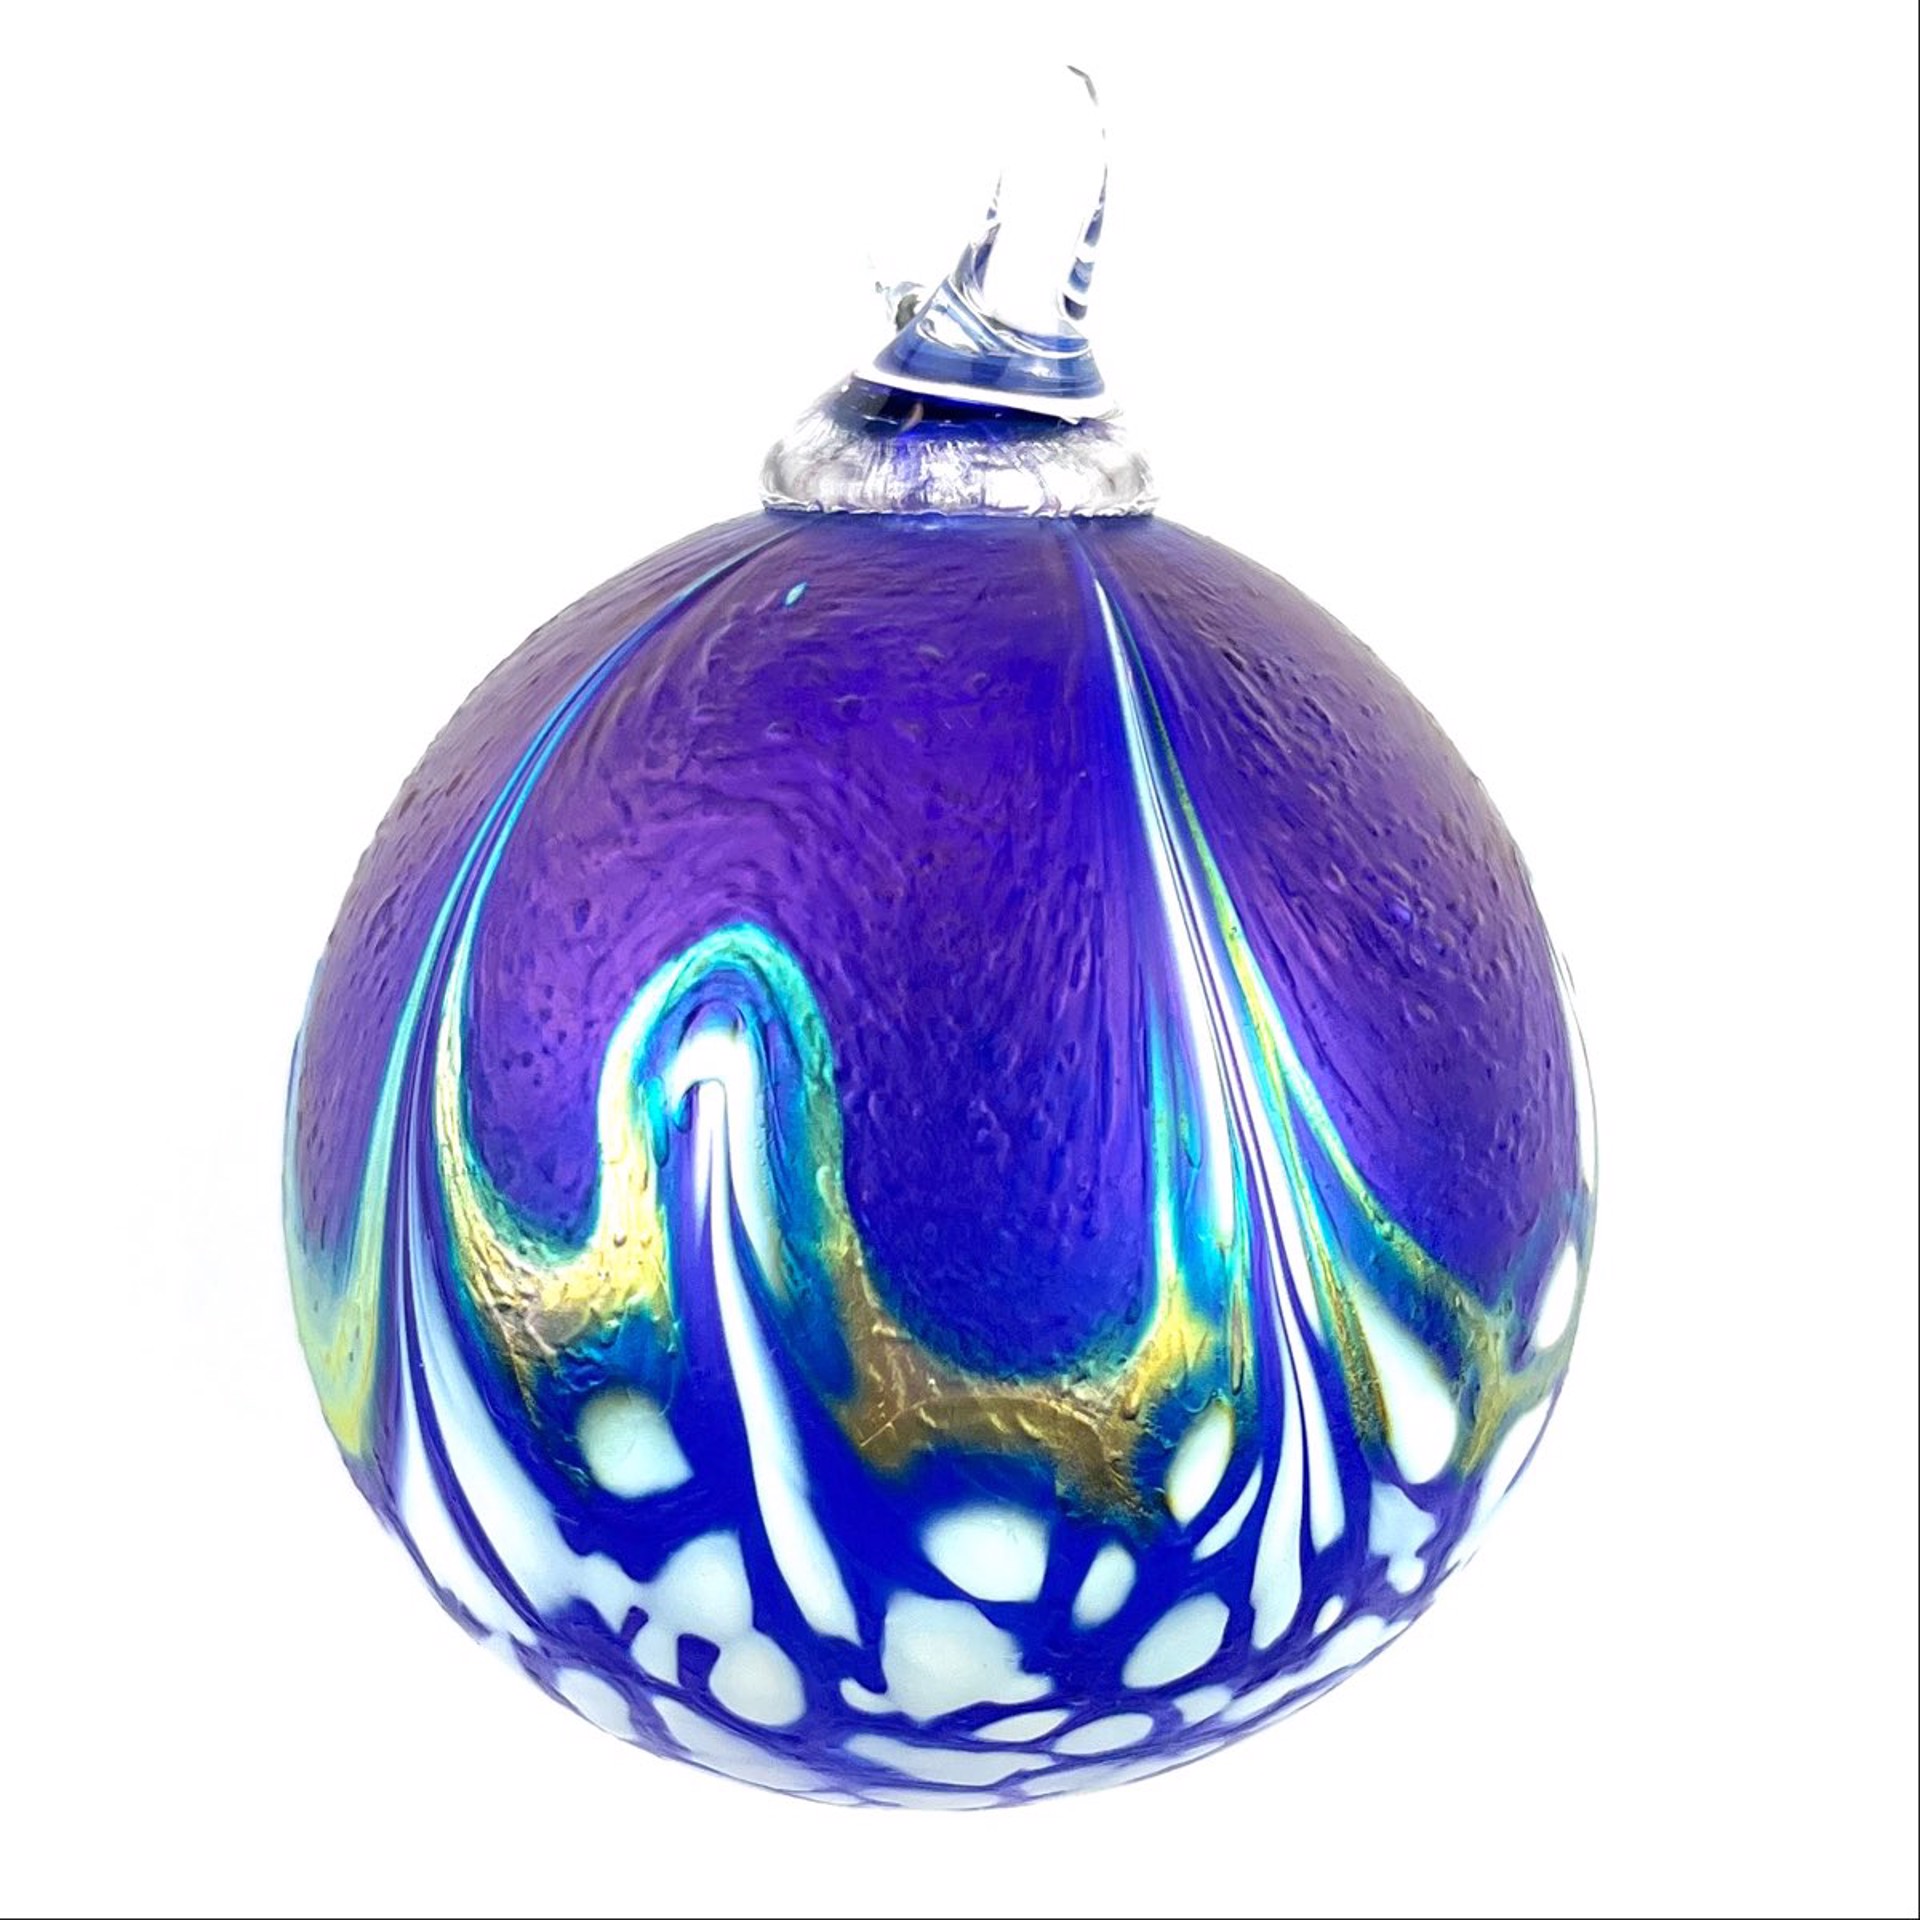 Artisan Northern Lights Ornament by Furnace Glass